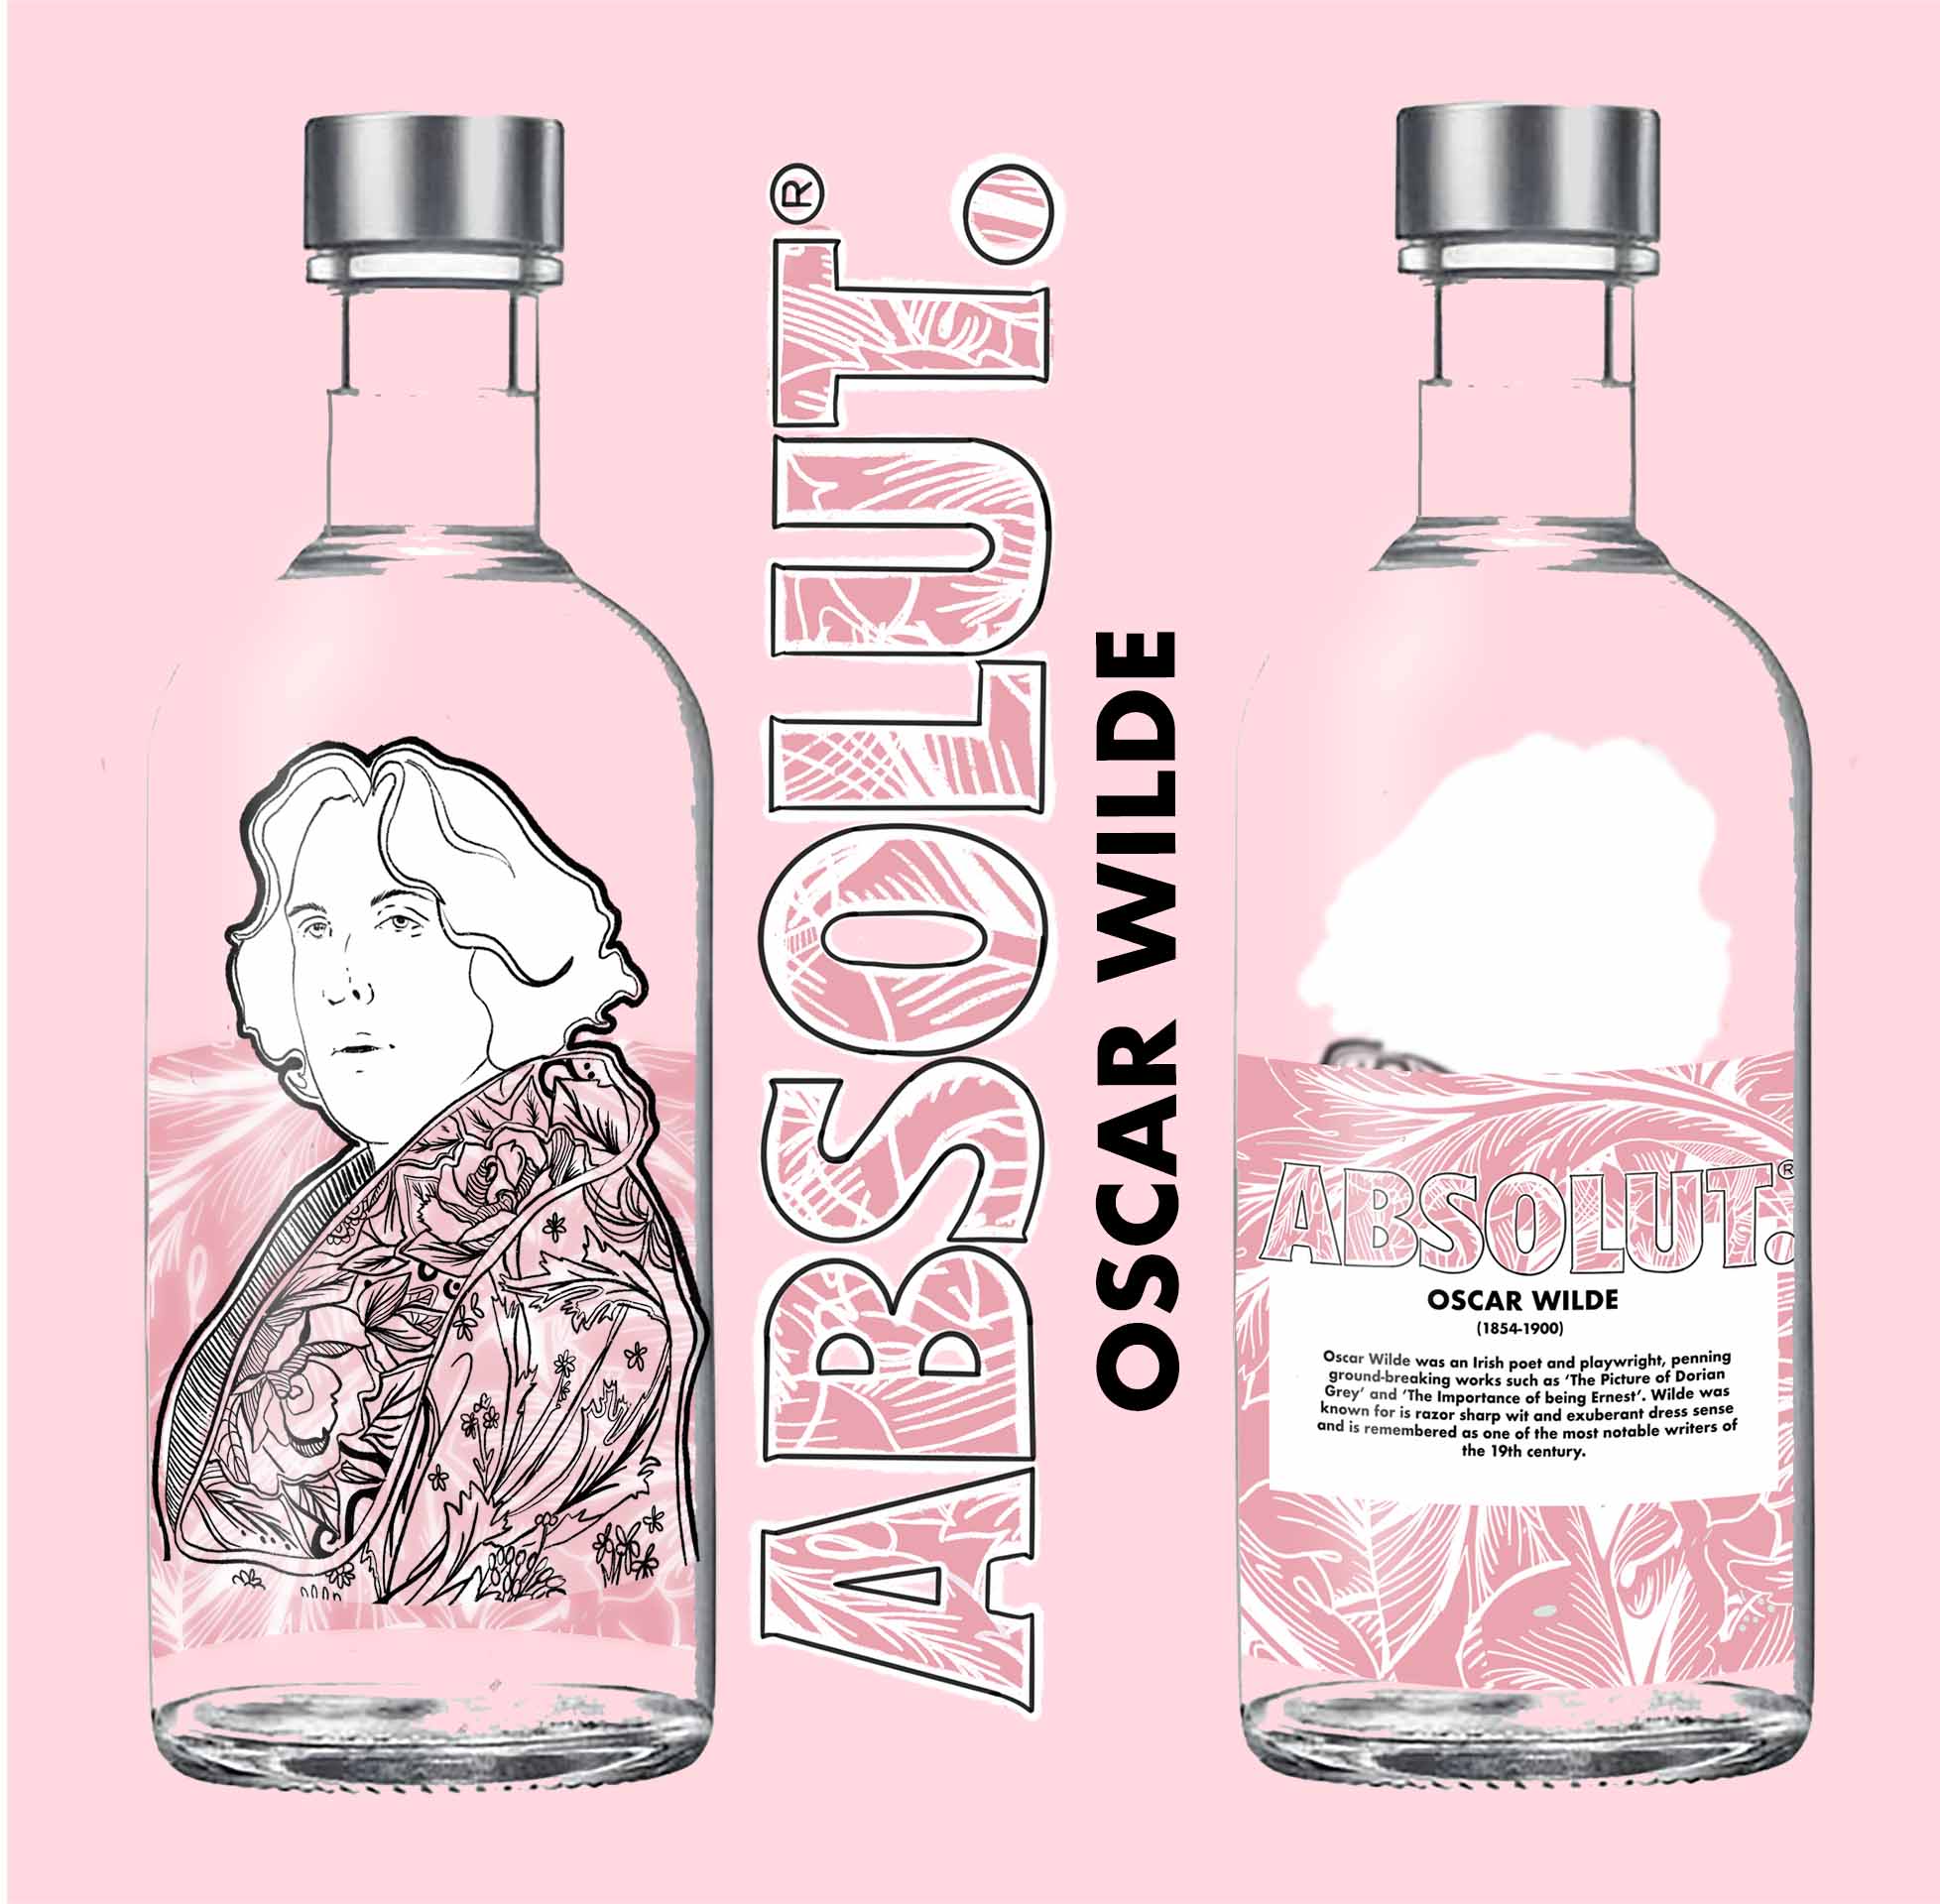 Absolut Vodka Pride Packaging, featuring Oscar Wilde